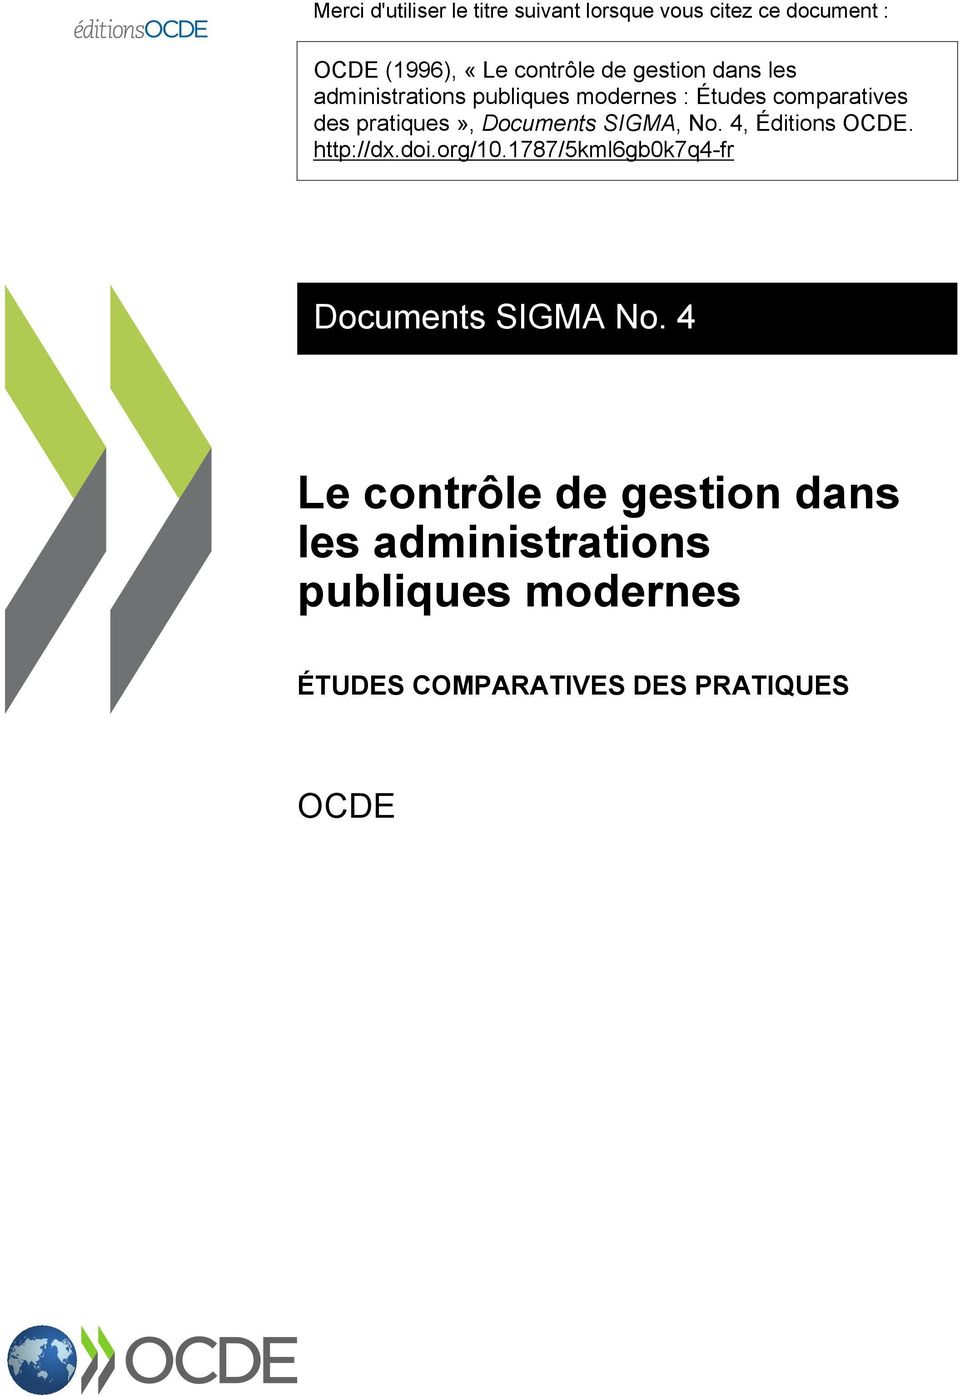 Documents SIGMA, No. 4, Éditions OCDE. http://dx.doi.org/10.